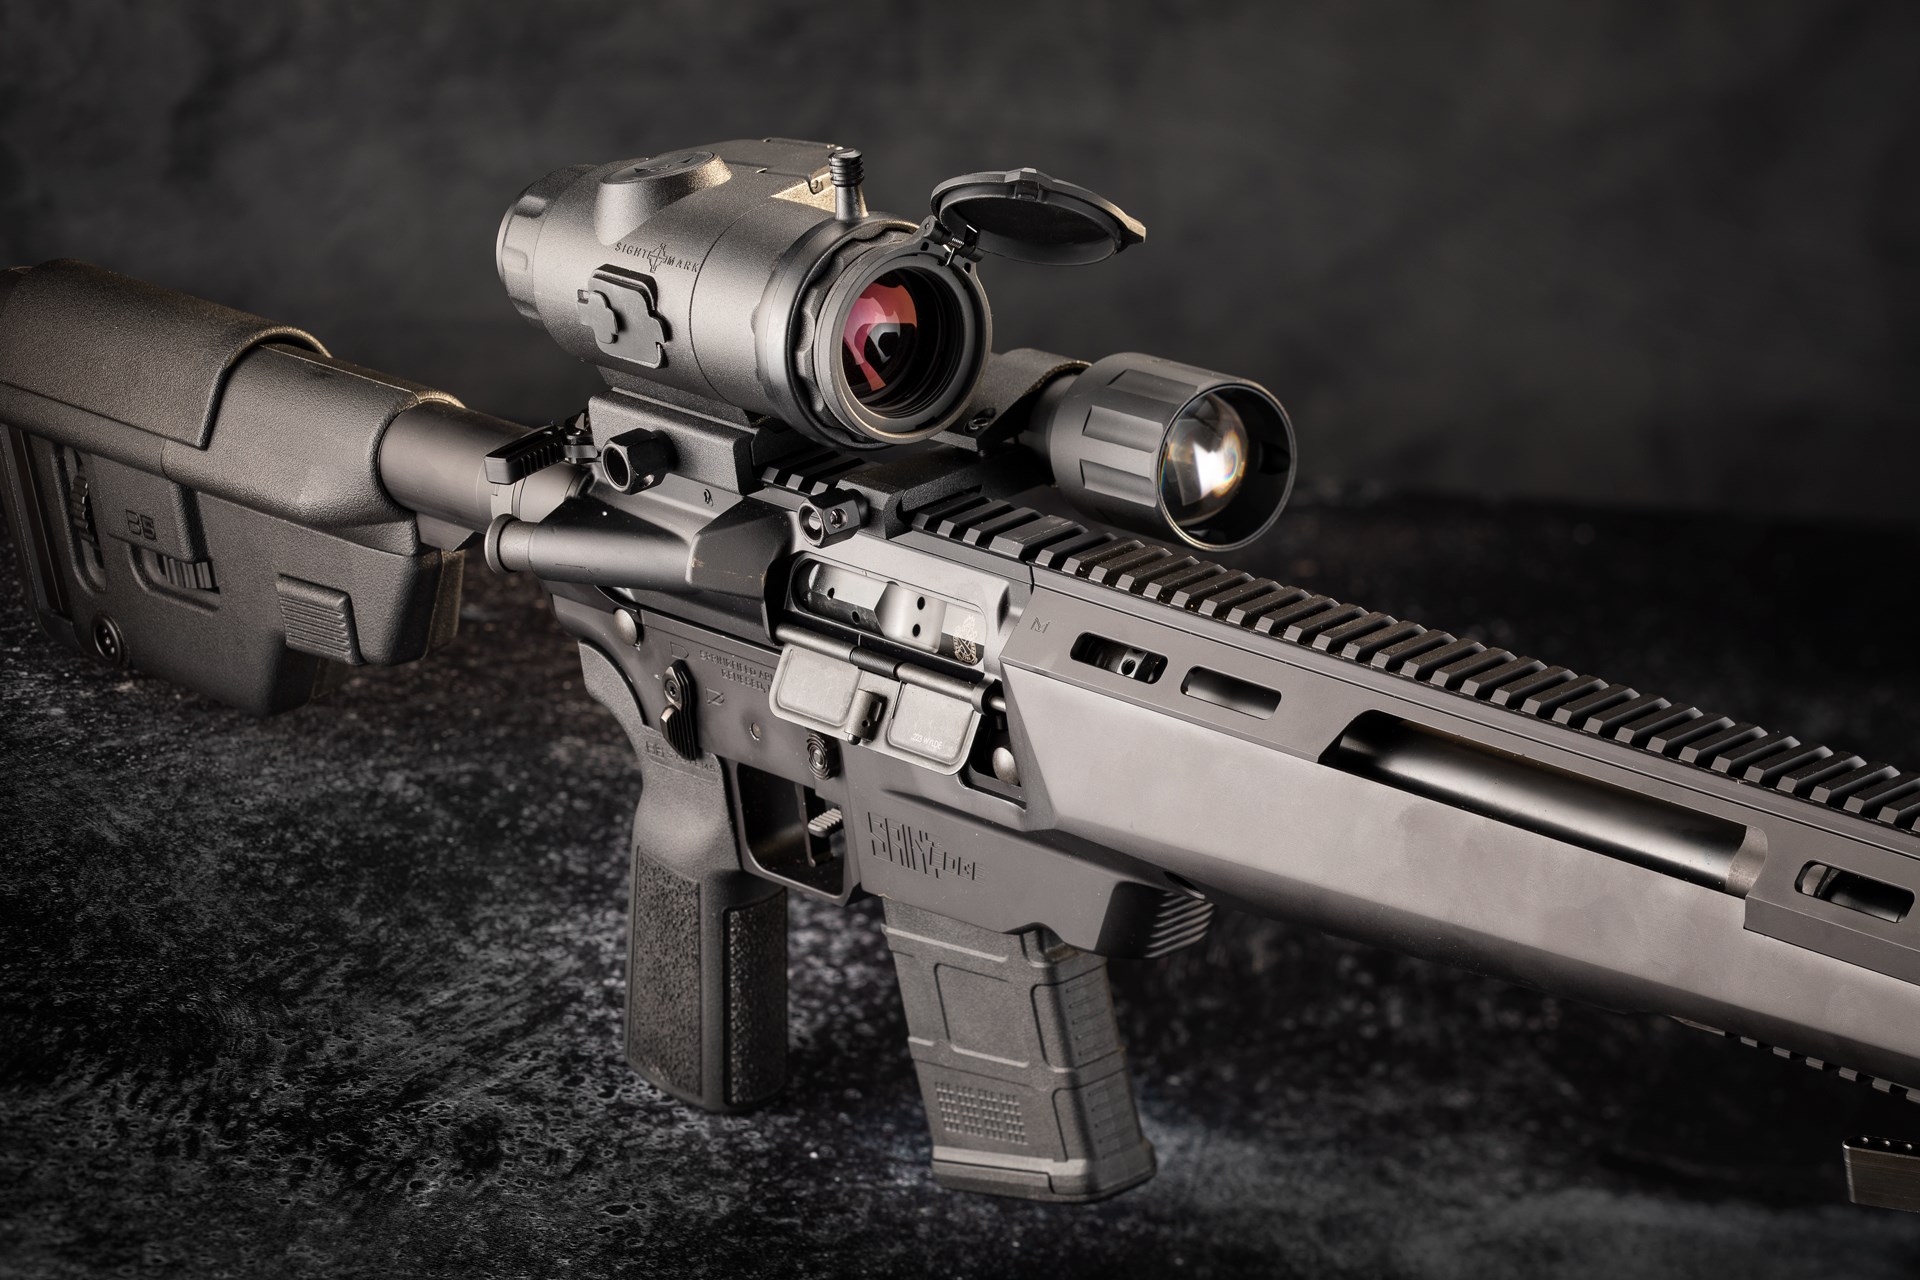 Sightmark Wraith optic on top Springfield Armory Saint rifle precision night vision IR illuminator